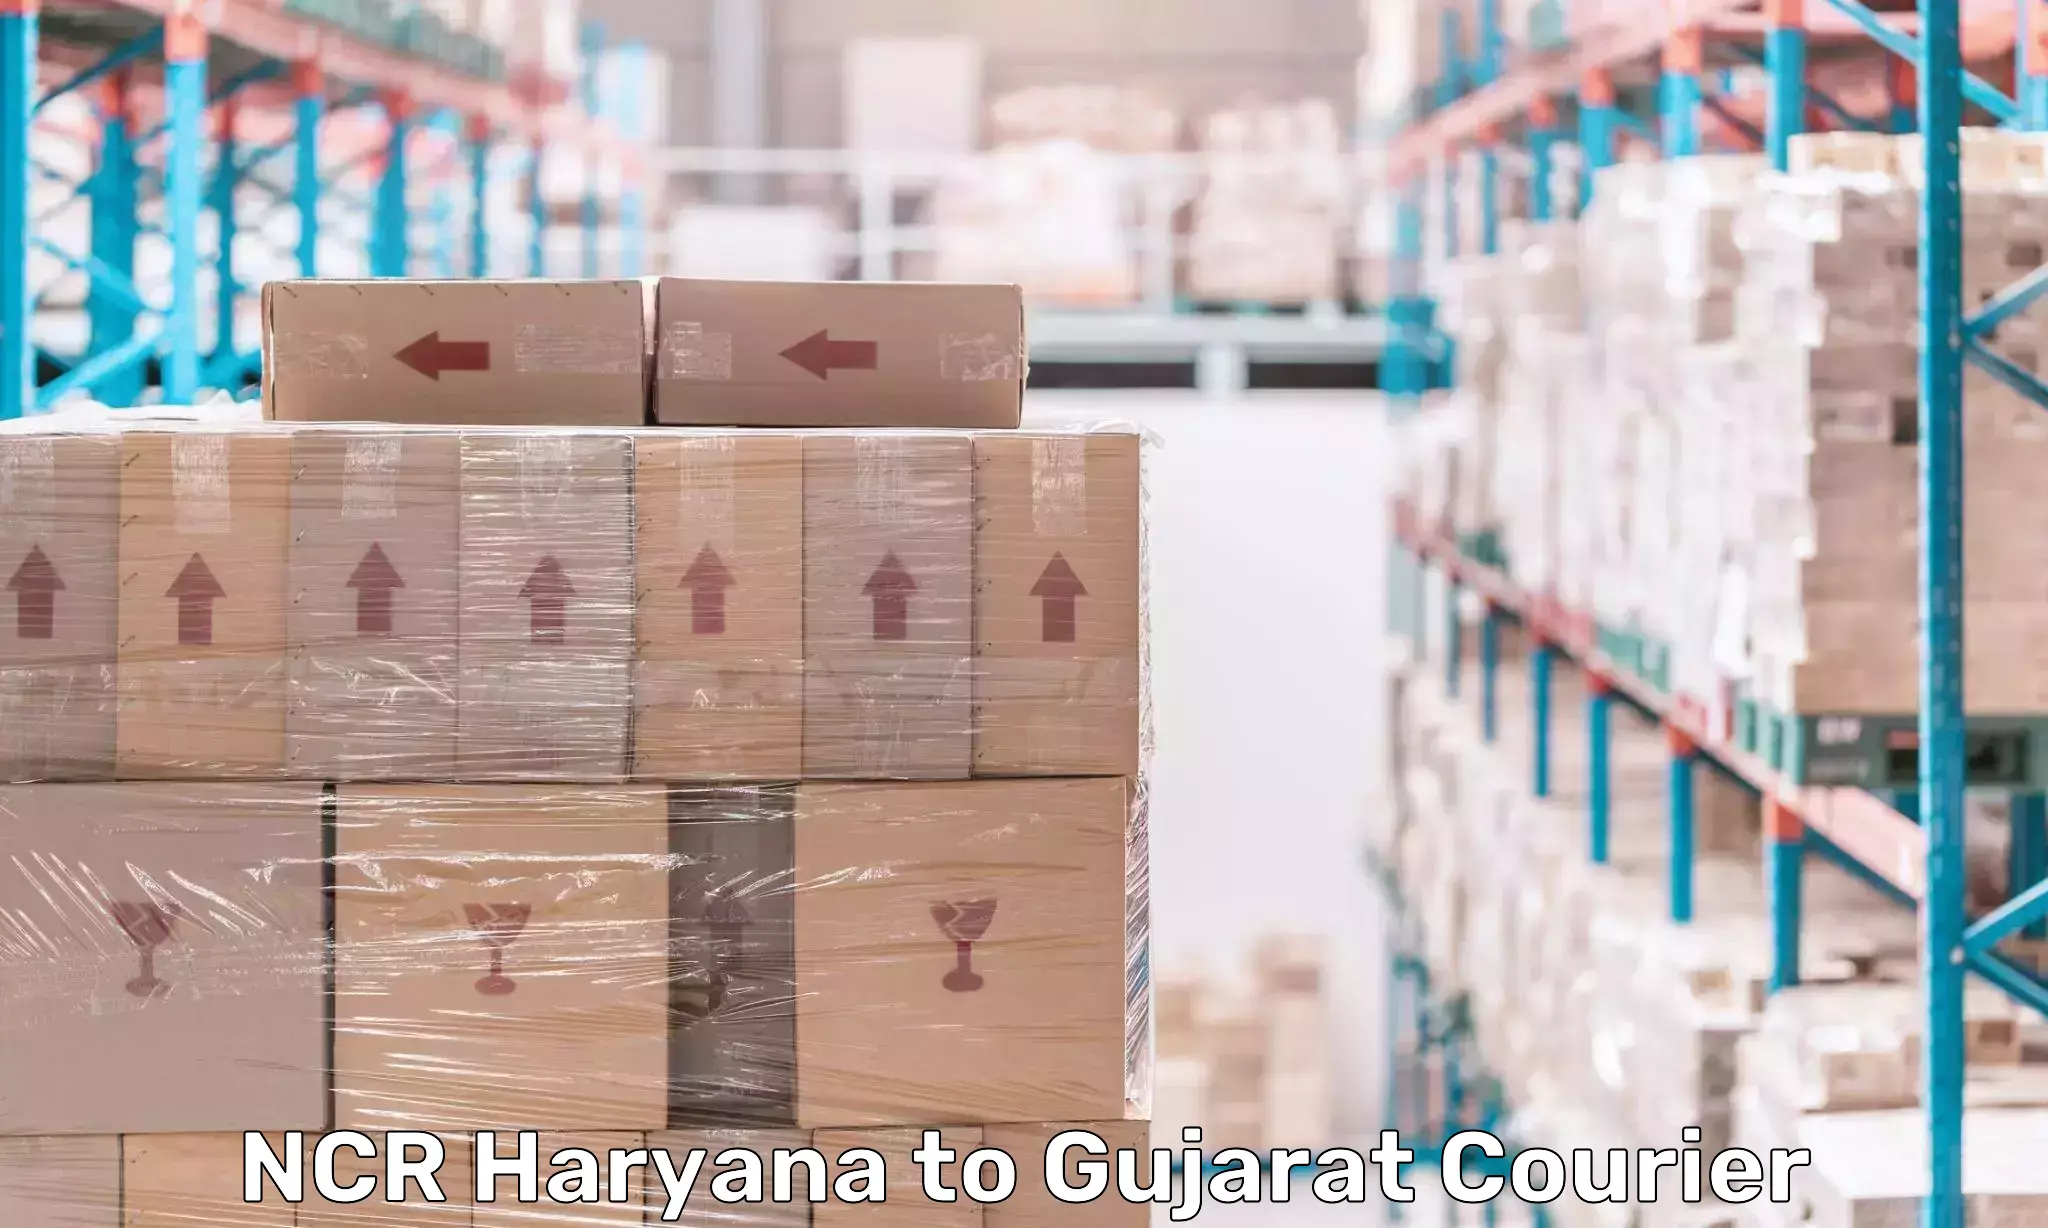 Global logistics network NCR Haryana to Godhra